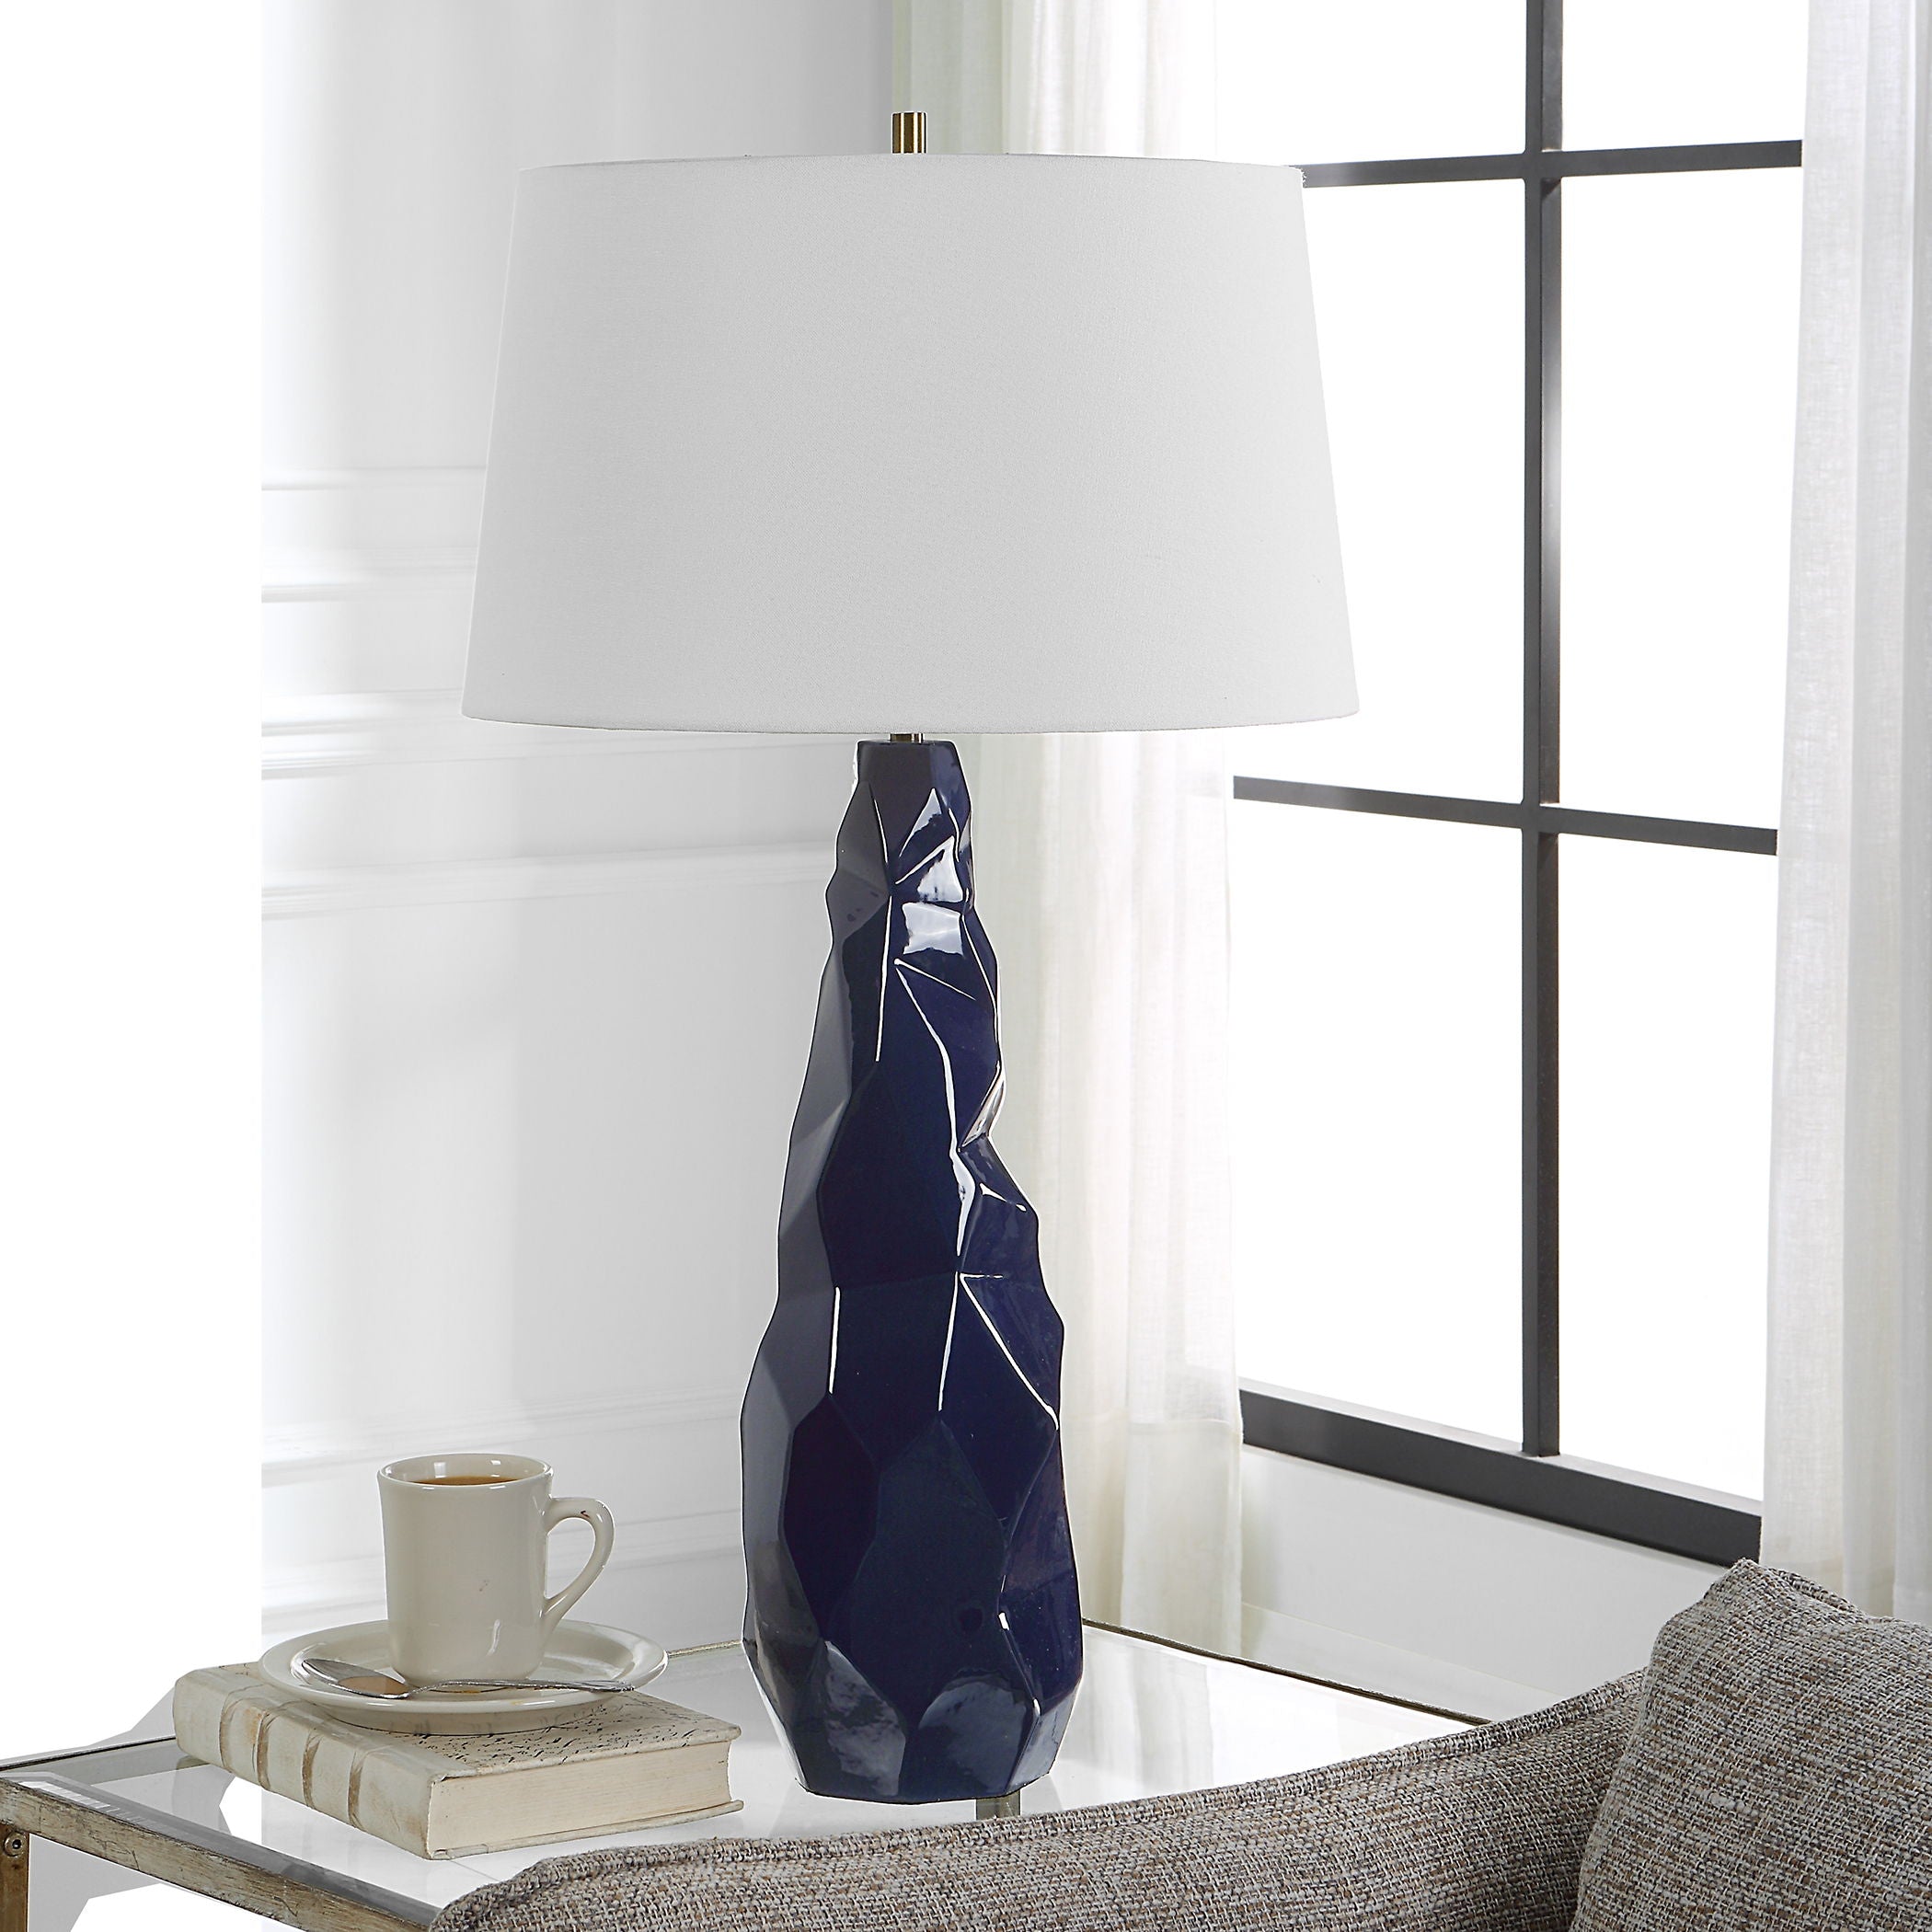 Kavos - Geometric Blue Table Lamp